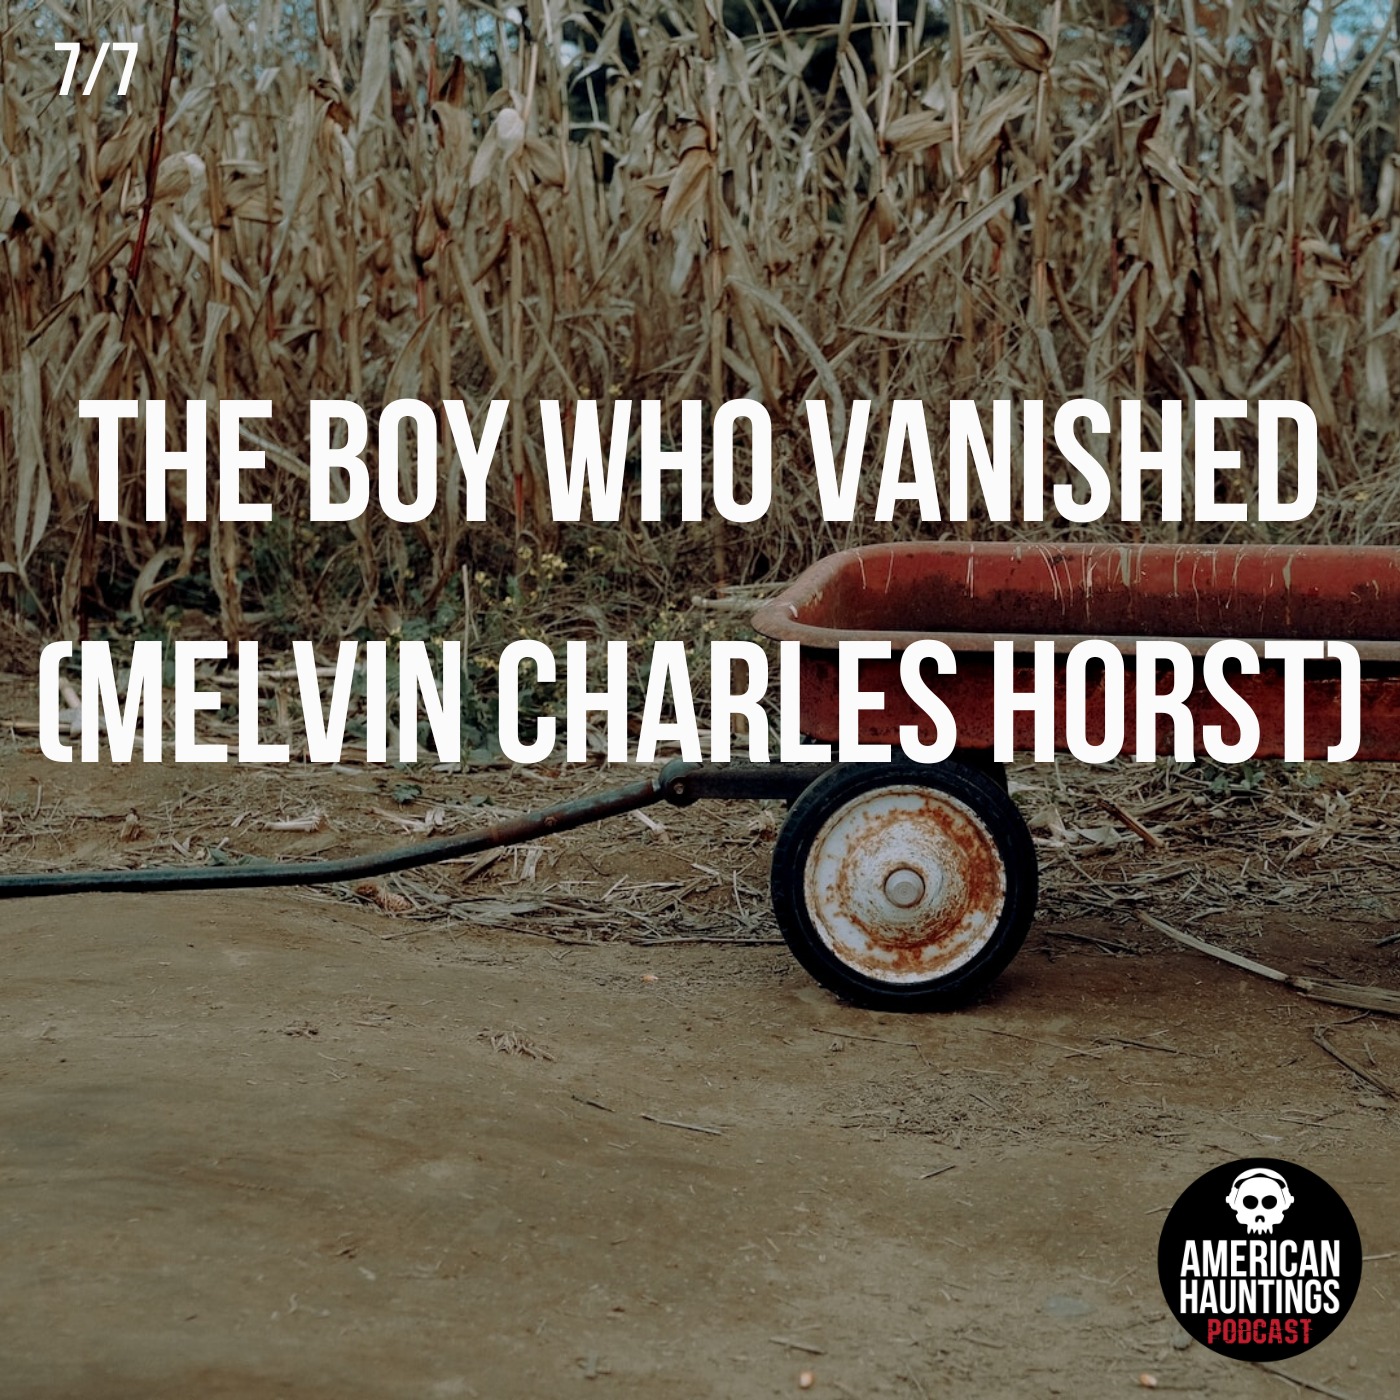 The Boy Who Vanished (Melvin Charles Horst)